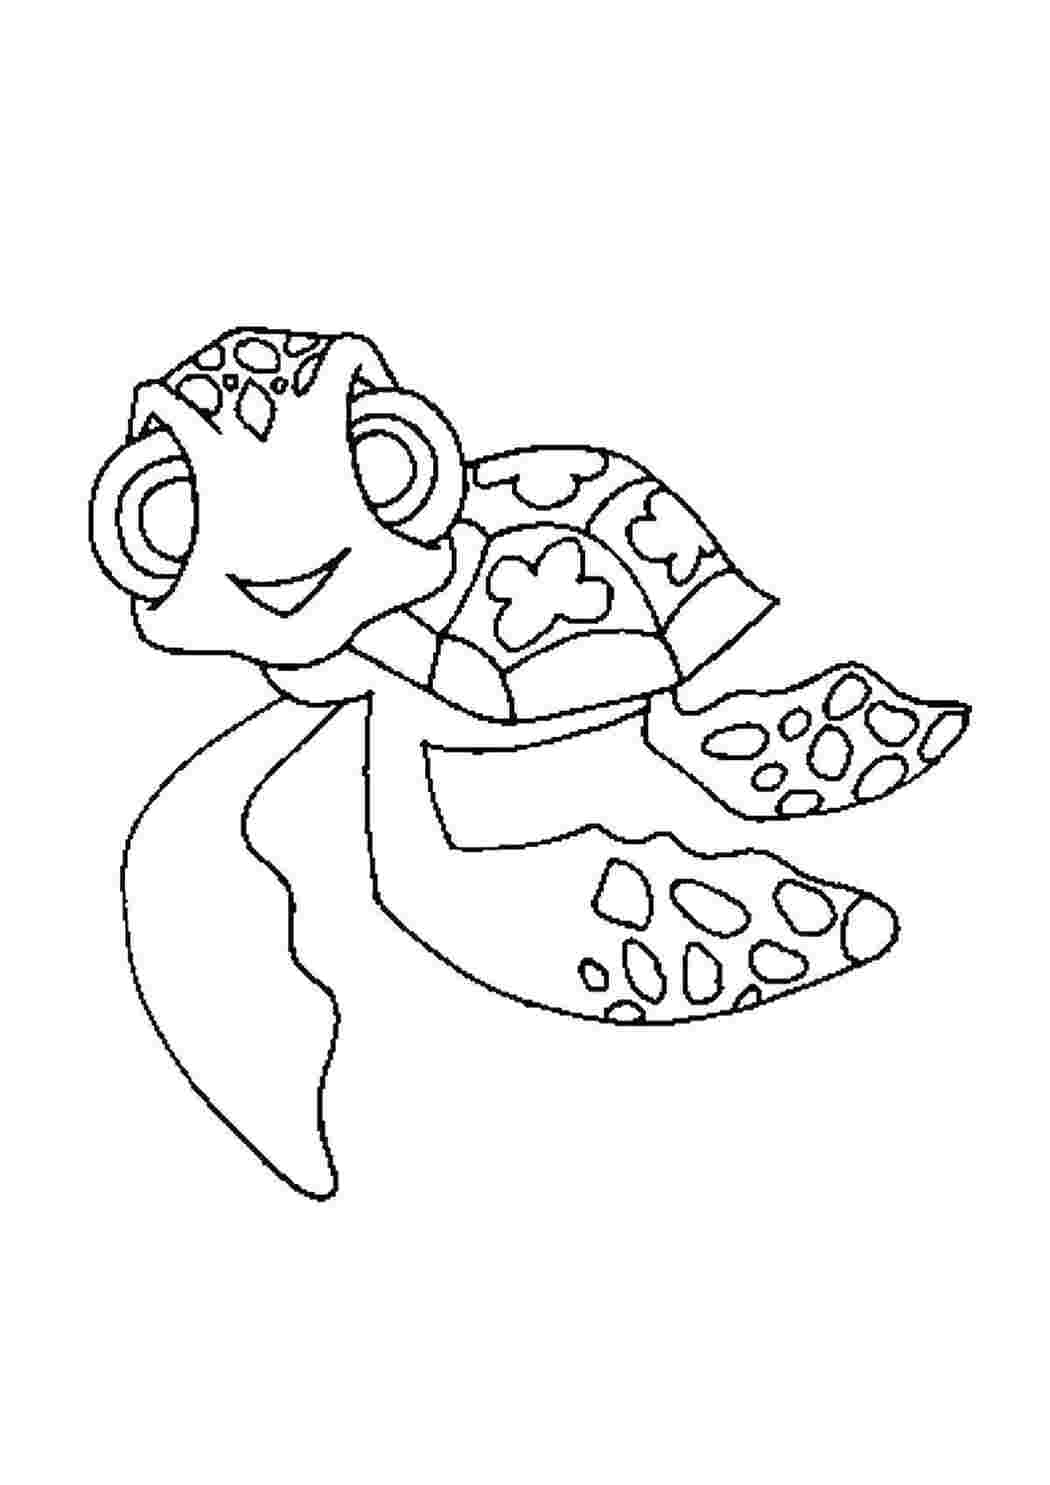 Раскраски Морская черепаха череп морская, черепаха